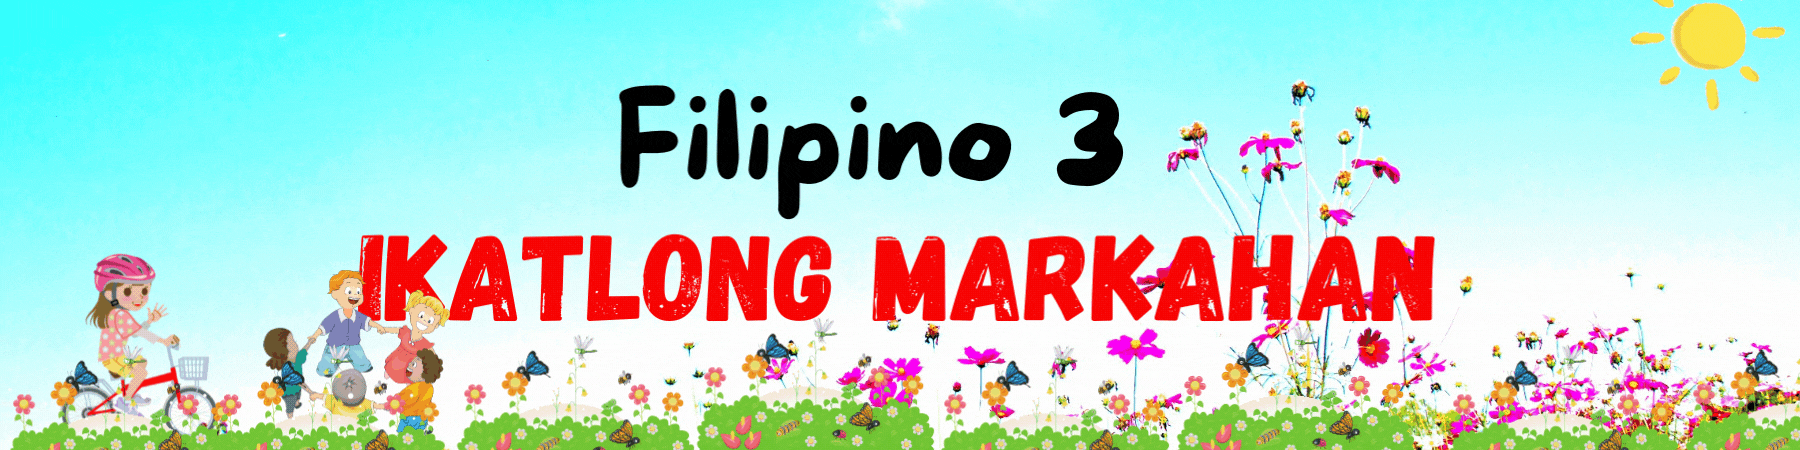 G3 - Filipino (Ikatlong Markahan) - Mrs. Villanueva